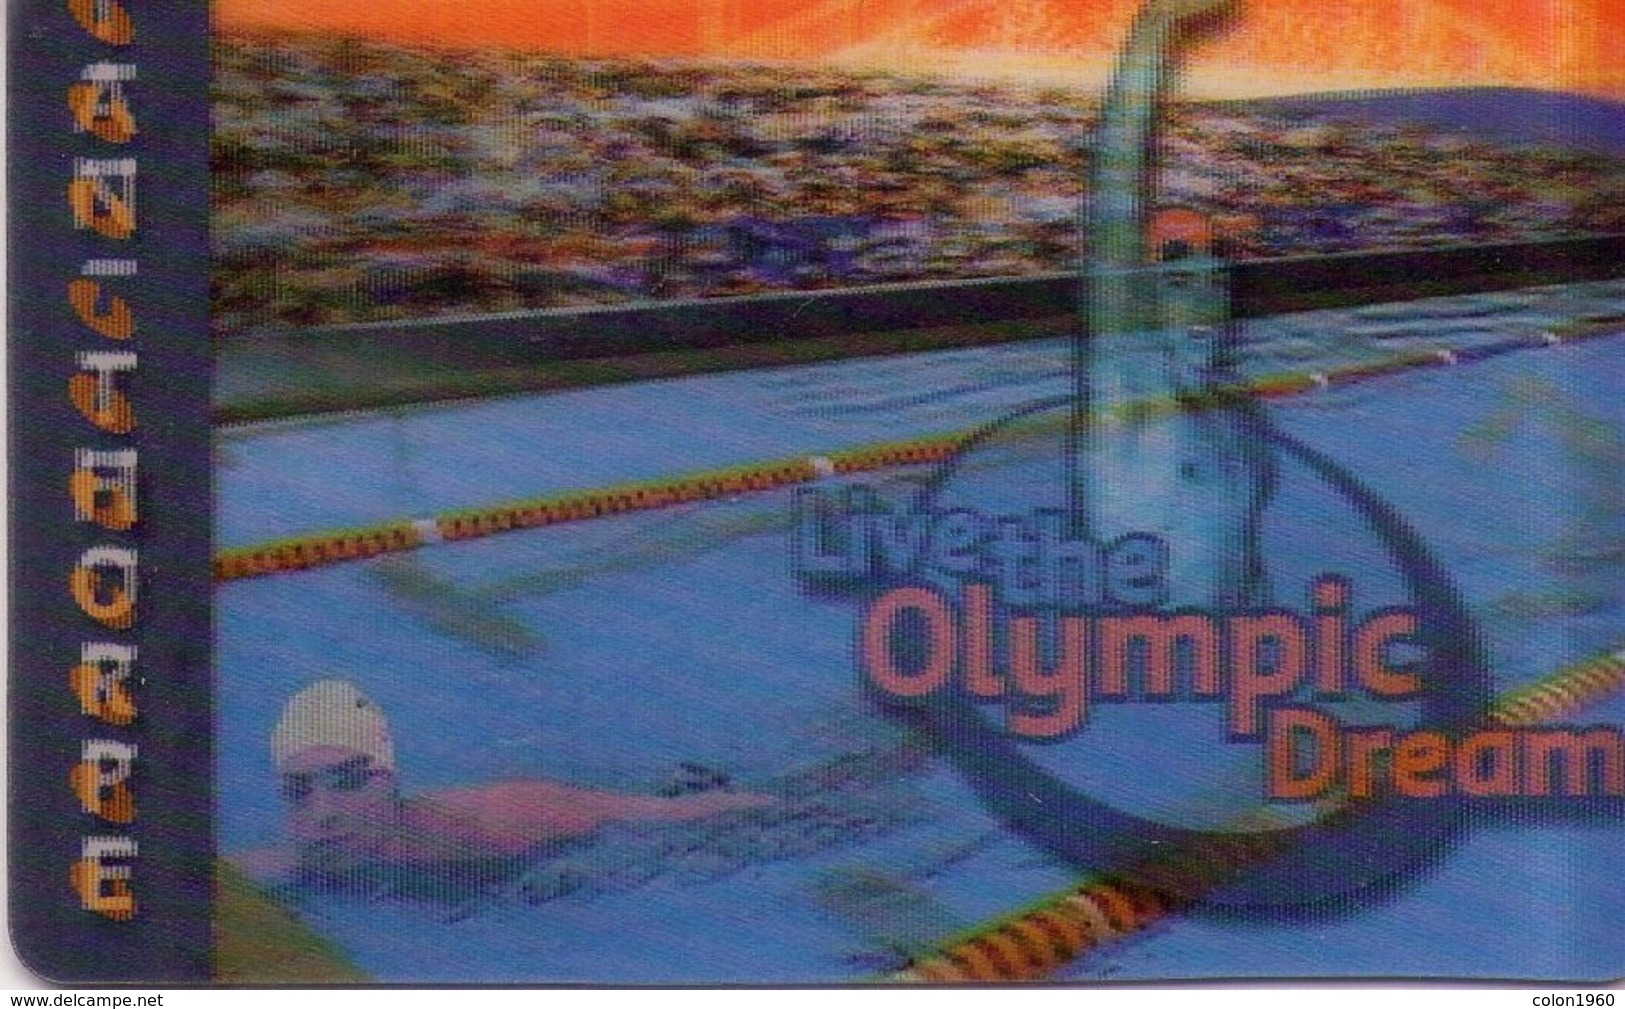 AUSTRALIA. 9900043PA. Holographic 3D. Living The Olympic Dream - Ian Thorpe. (012) - Australie